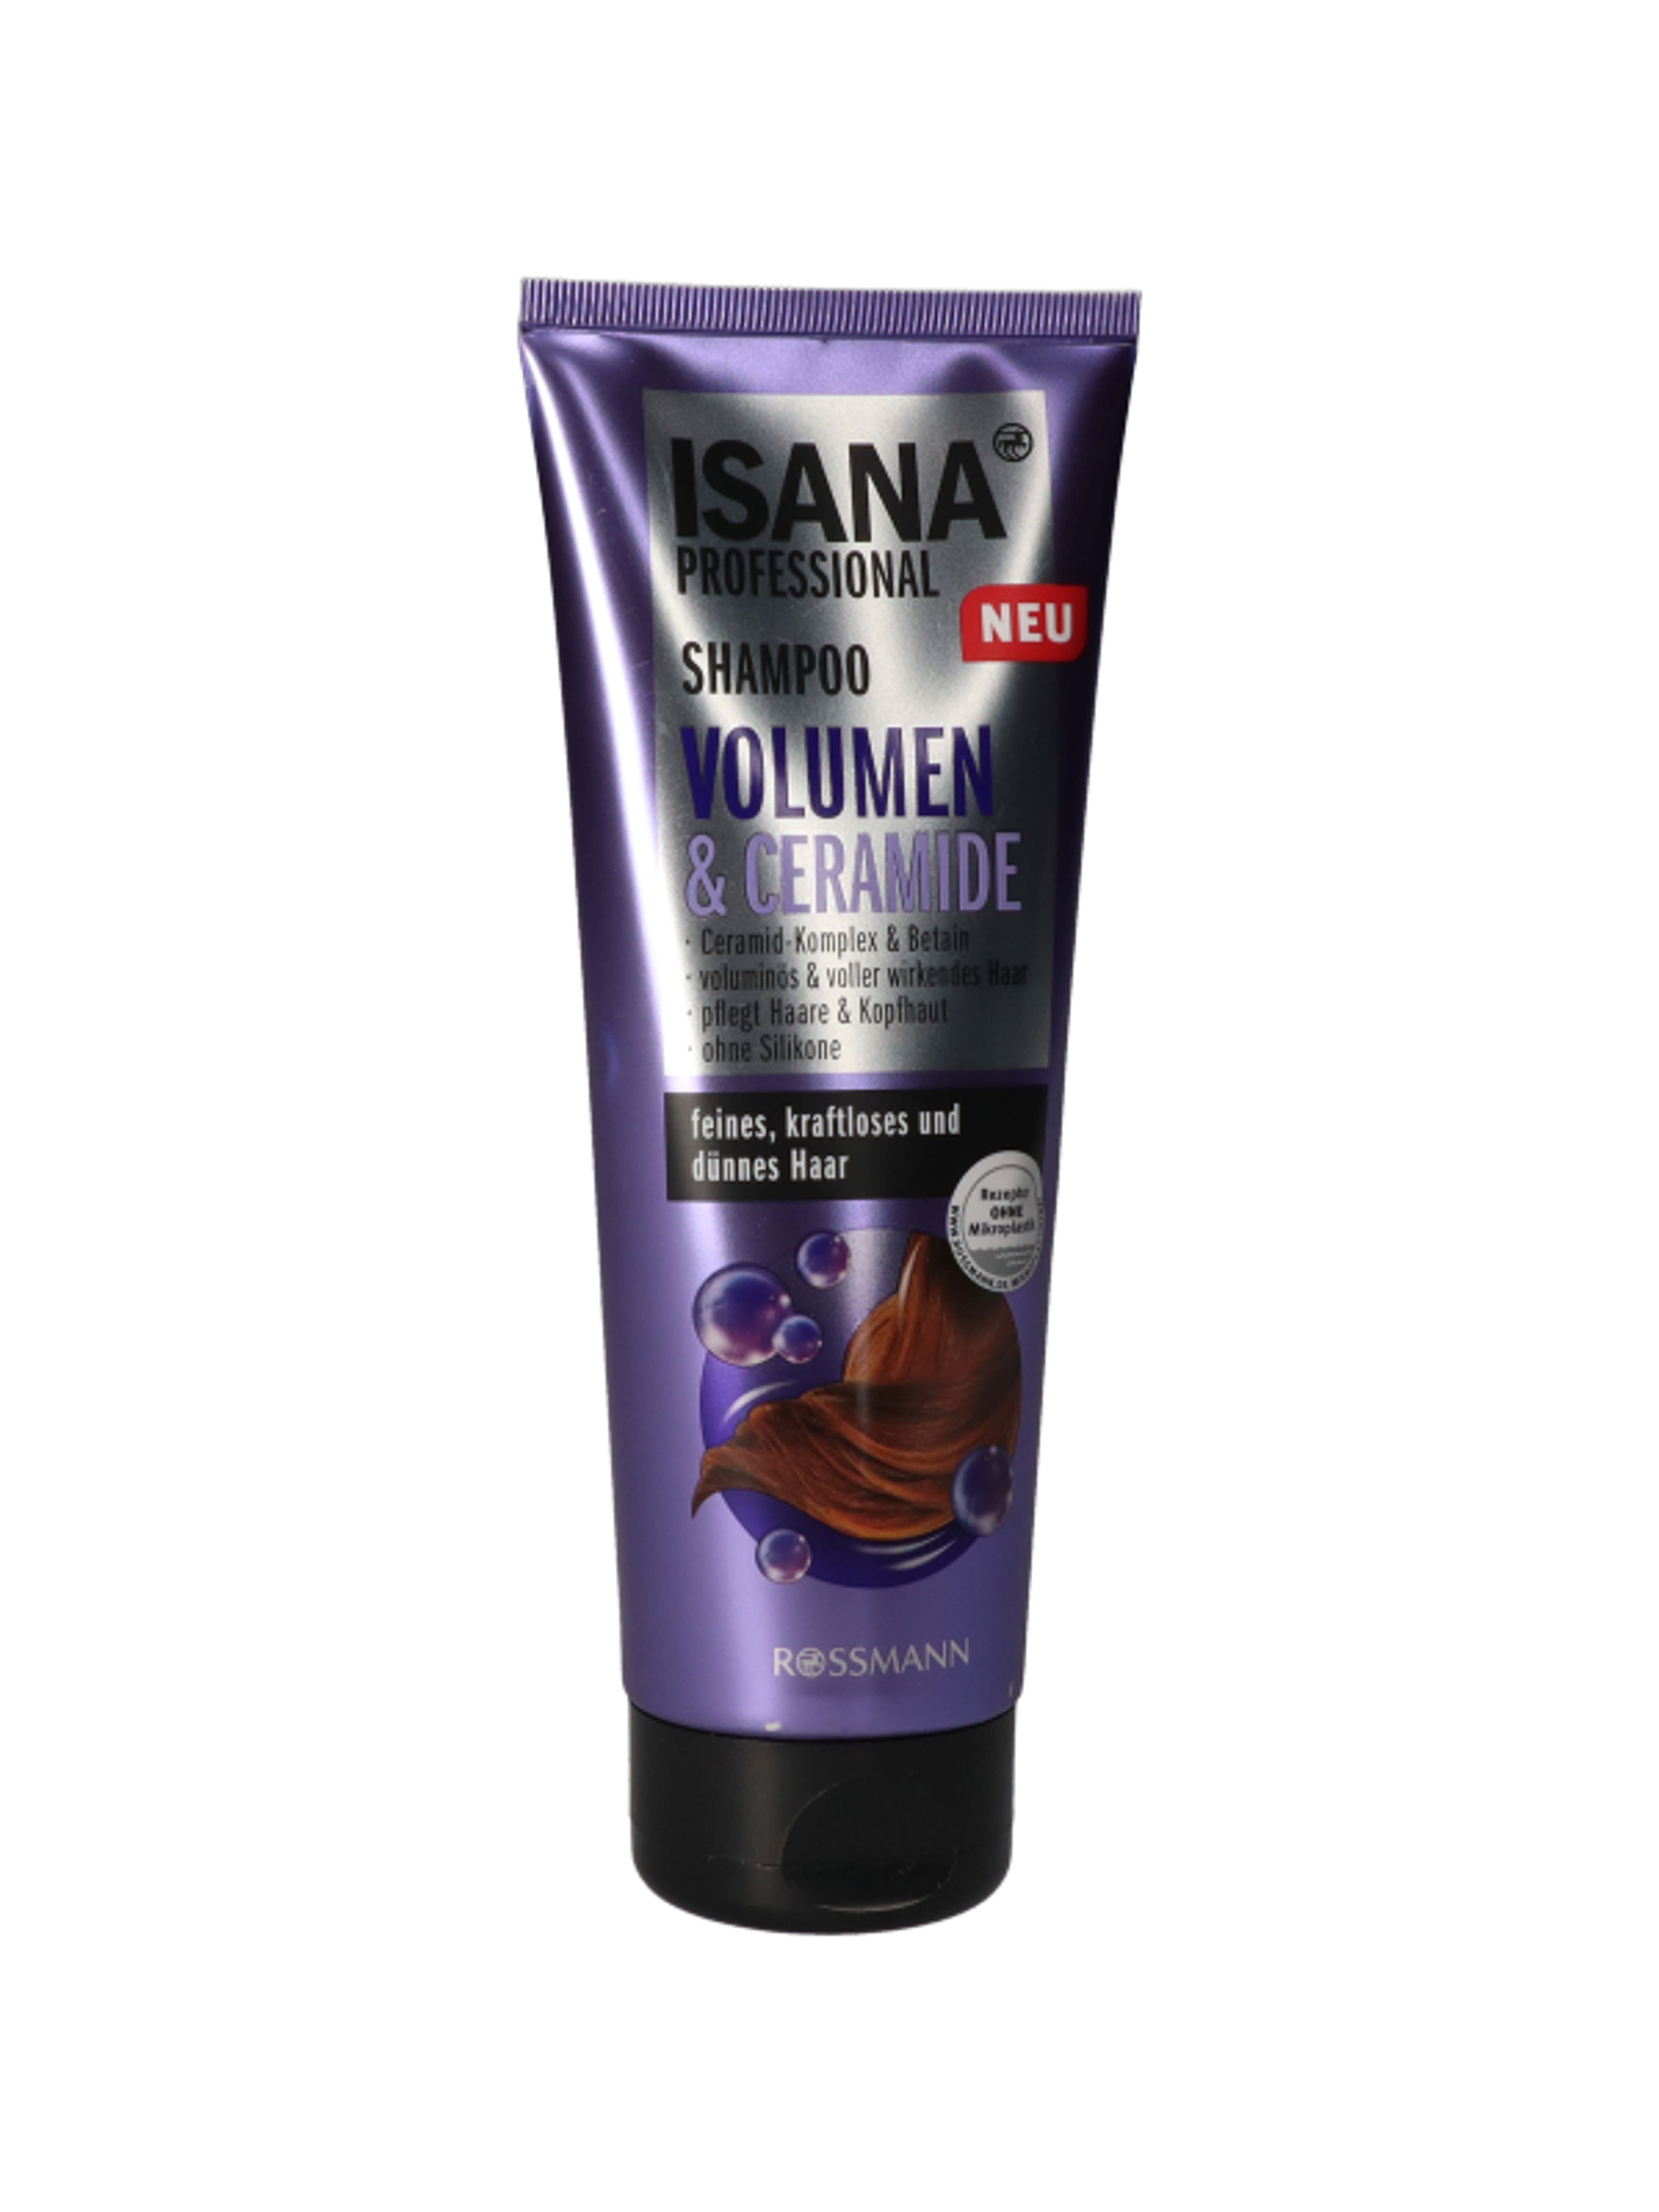 Isana Hair Professional Volume&Ceramide sampon - 250 ml-2